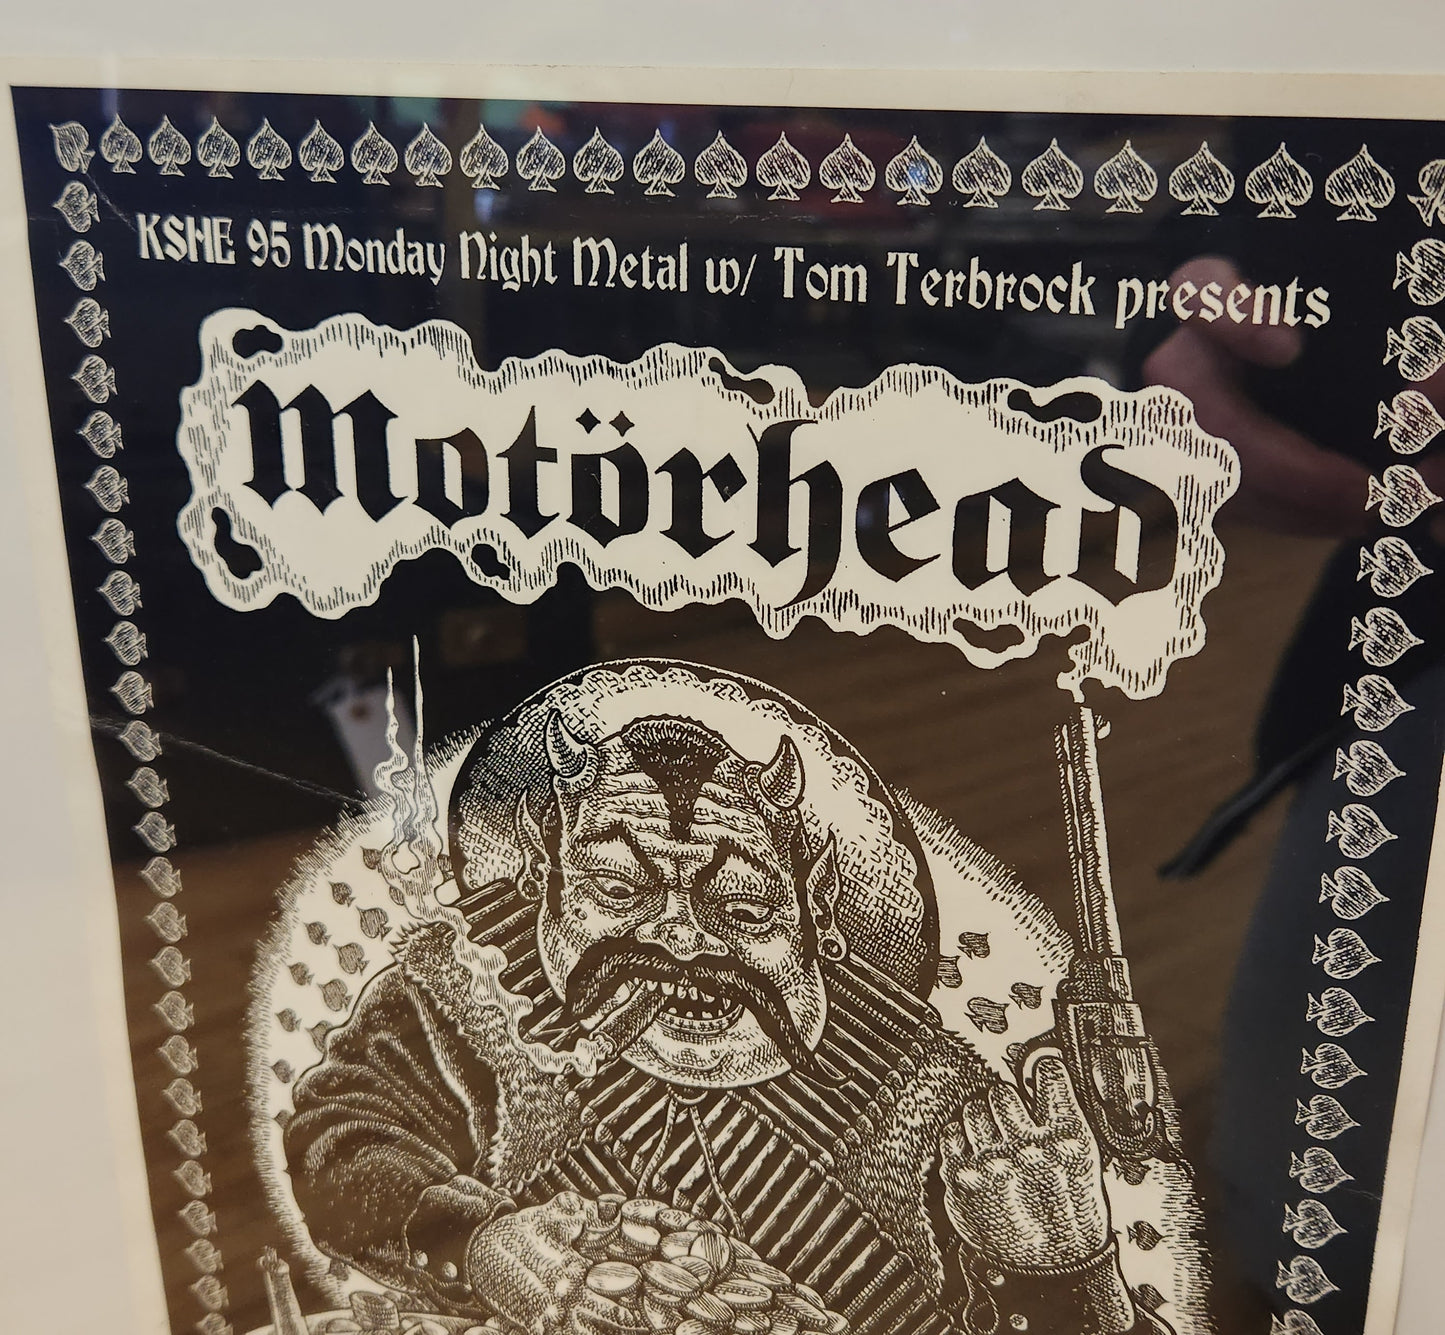 Motorhead KSHE 95 Monday Night Metal Concert Poster